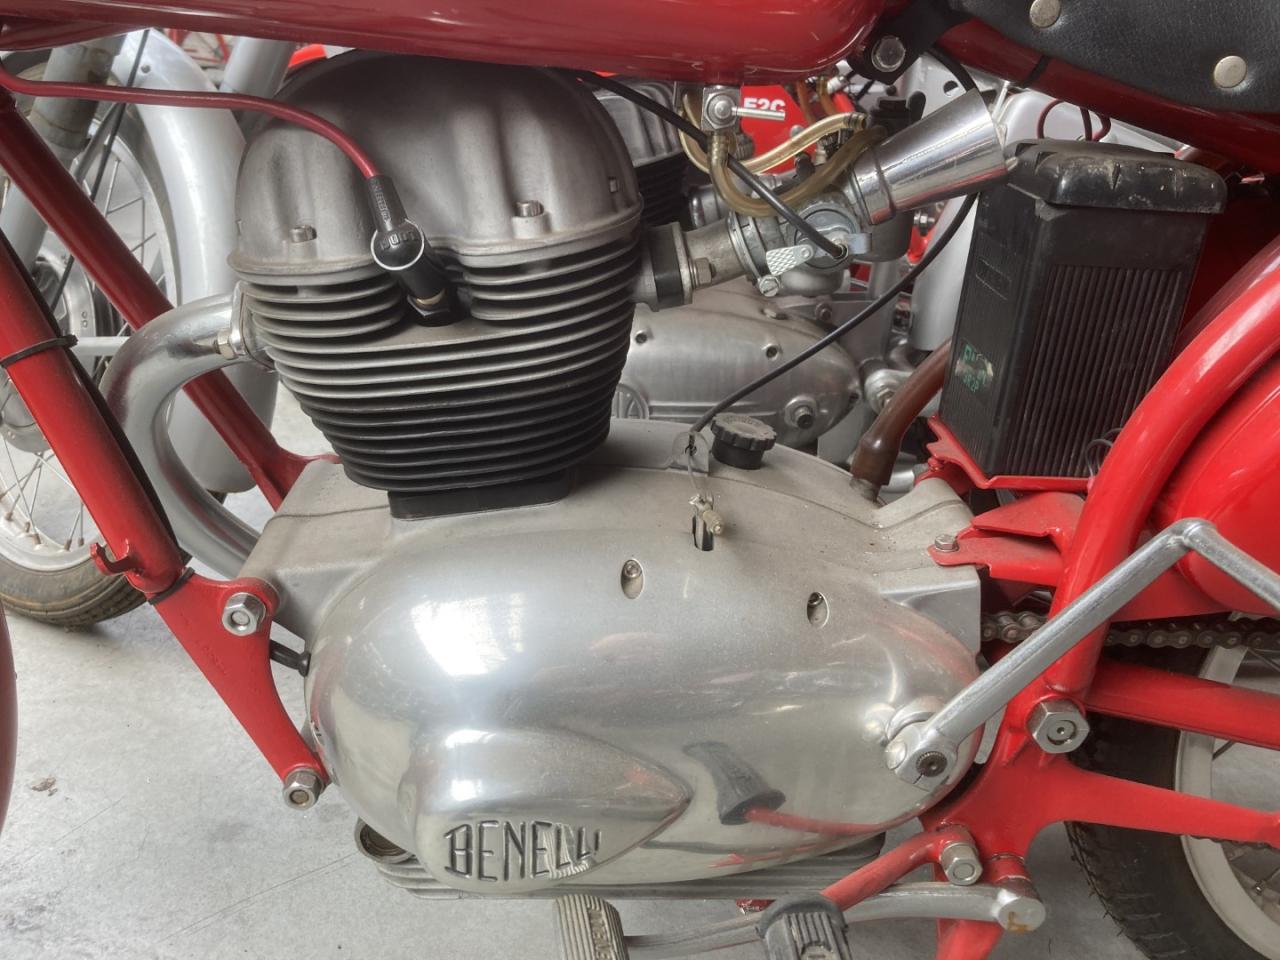 1960 Benelli 175S 4 stroke